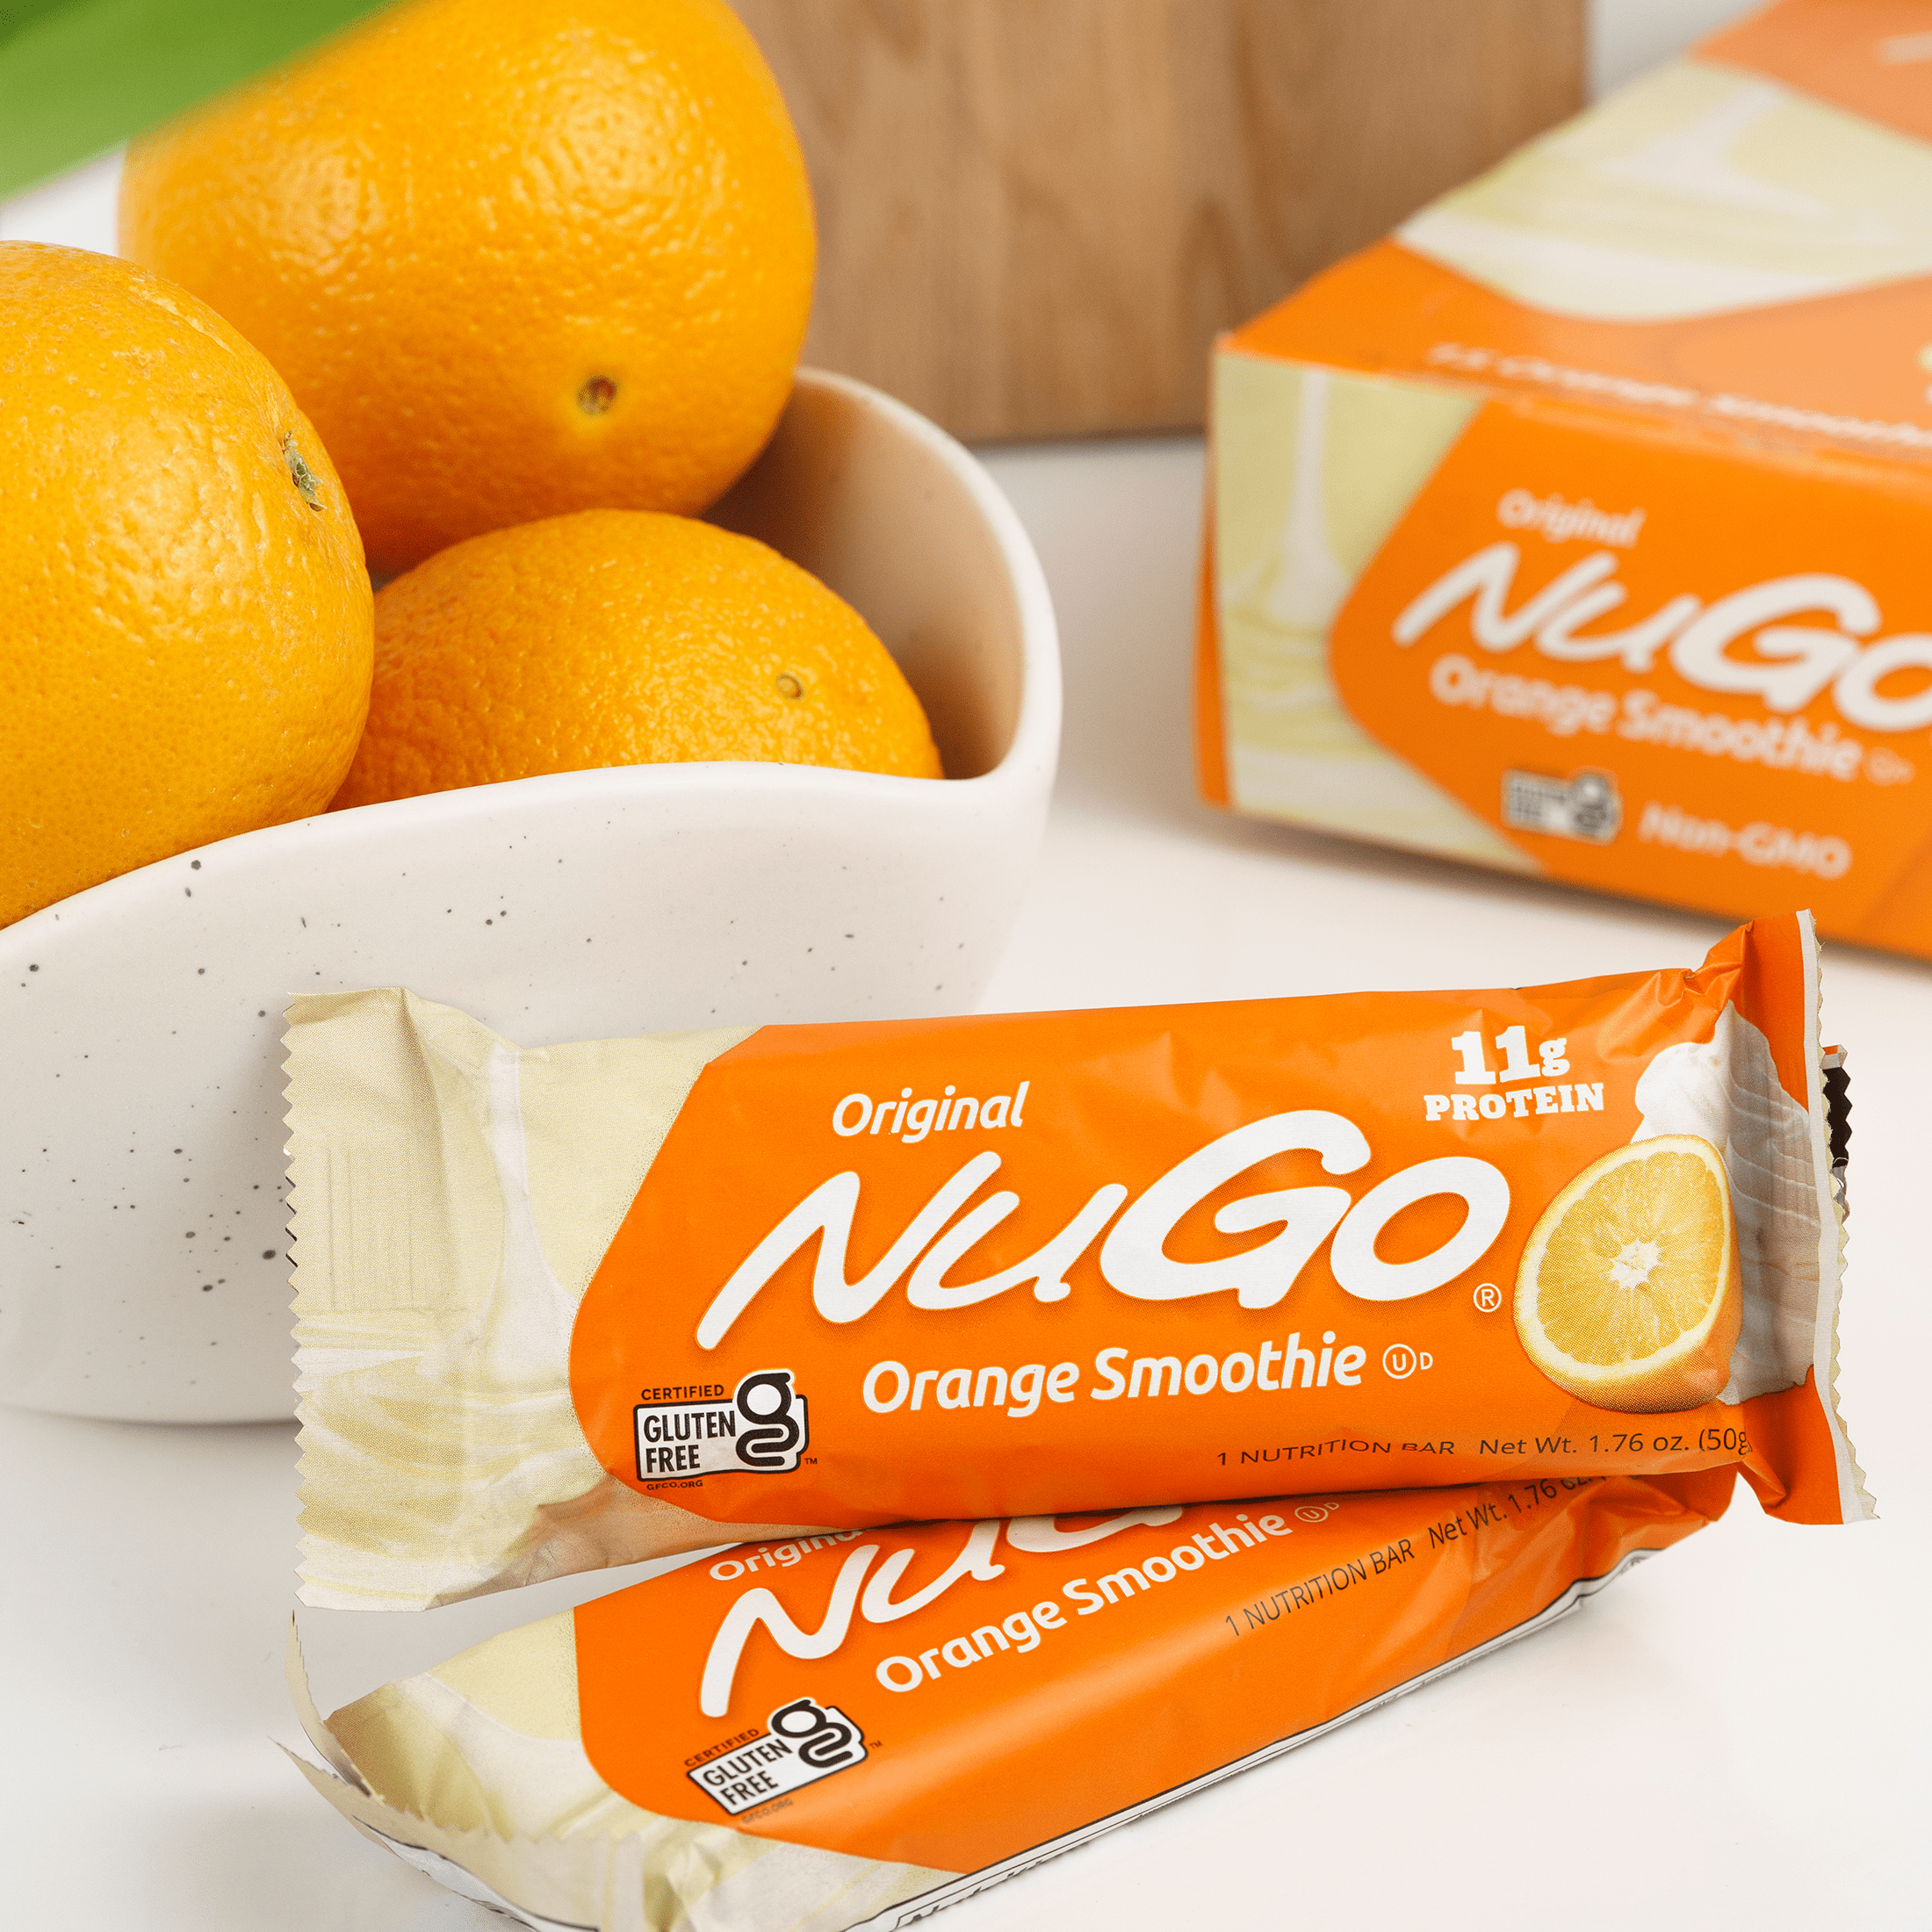 NuGo Orange Smoothie bar with Oranges